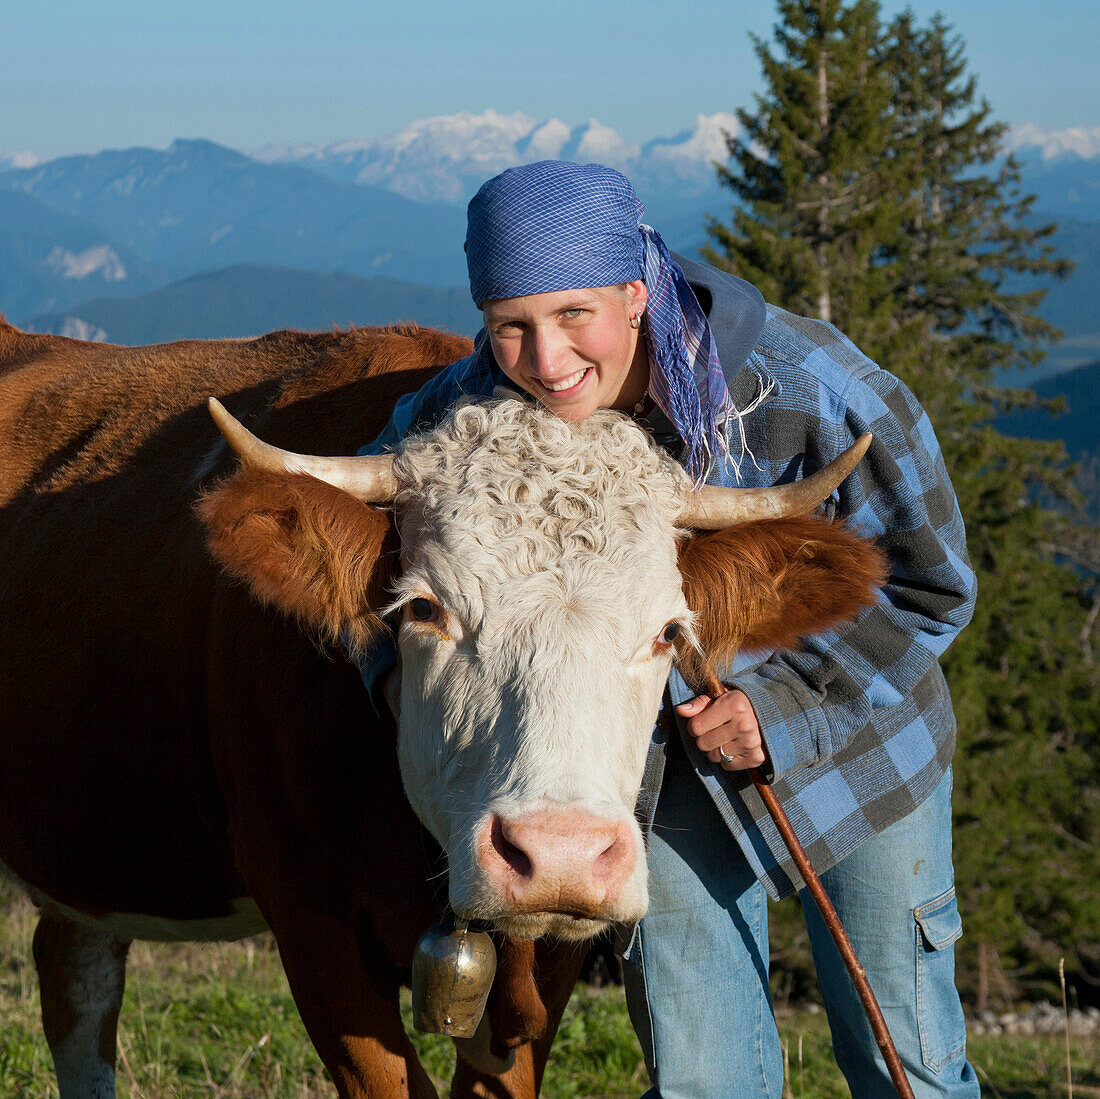 Dairymaid with cattle, Hofbauern-Alm, Kampenwand, Chiemgau, Upper Bavaria, Germany